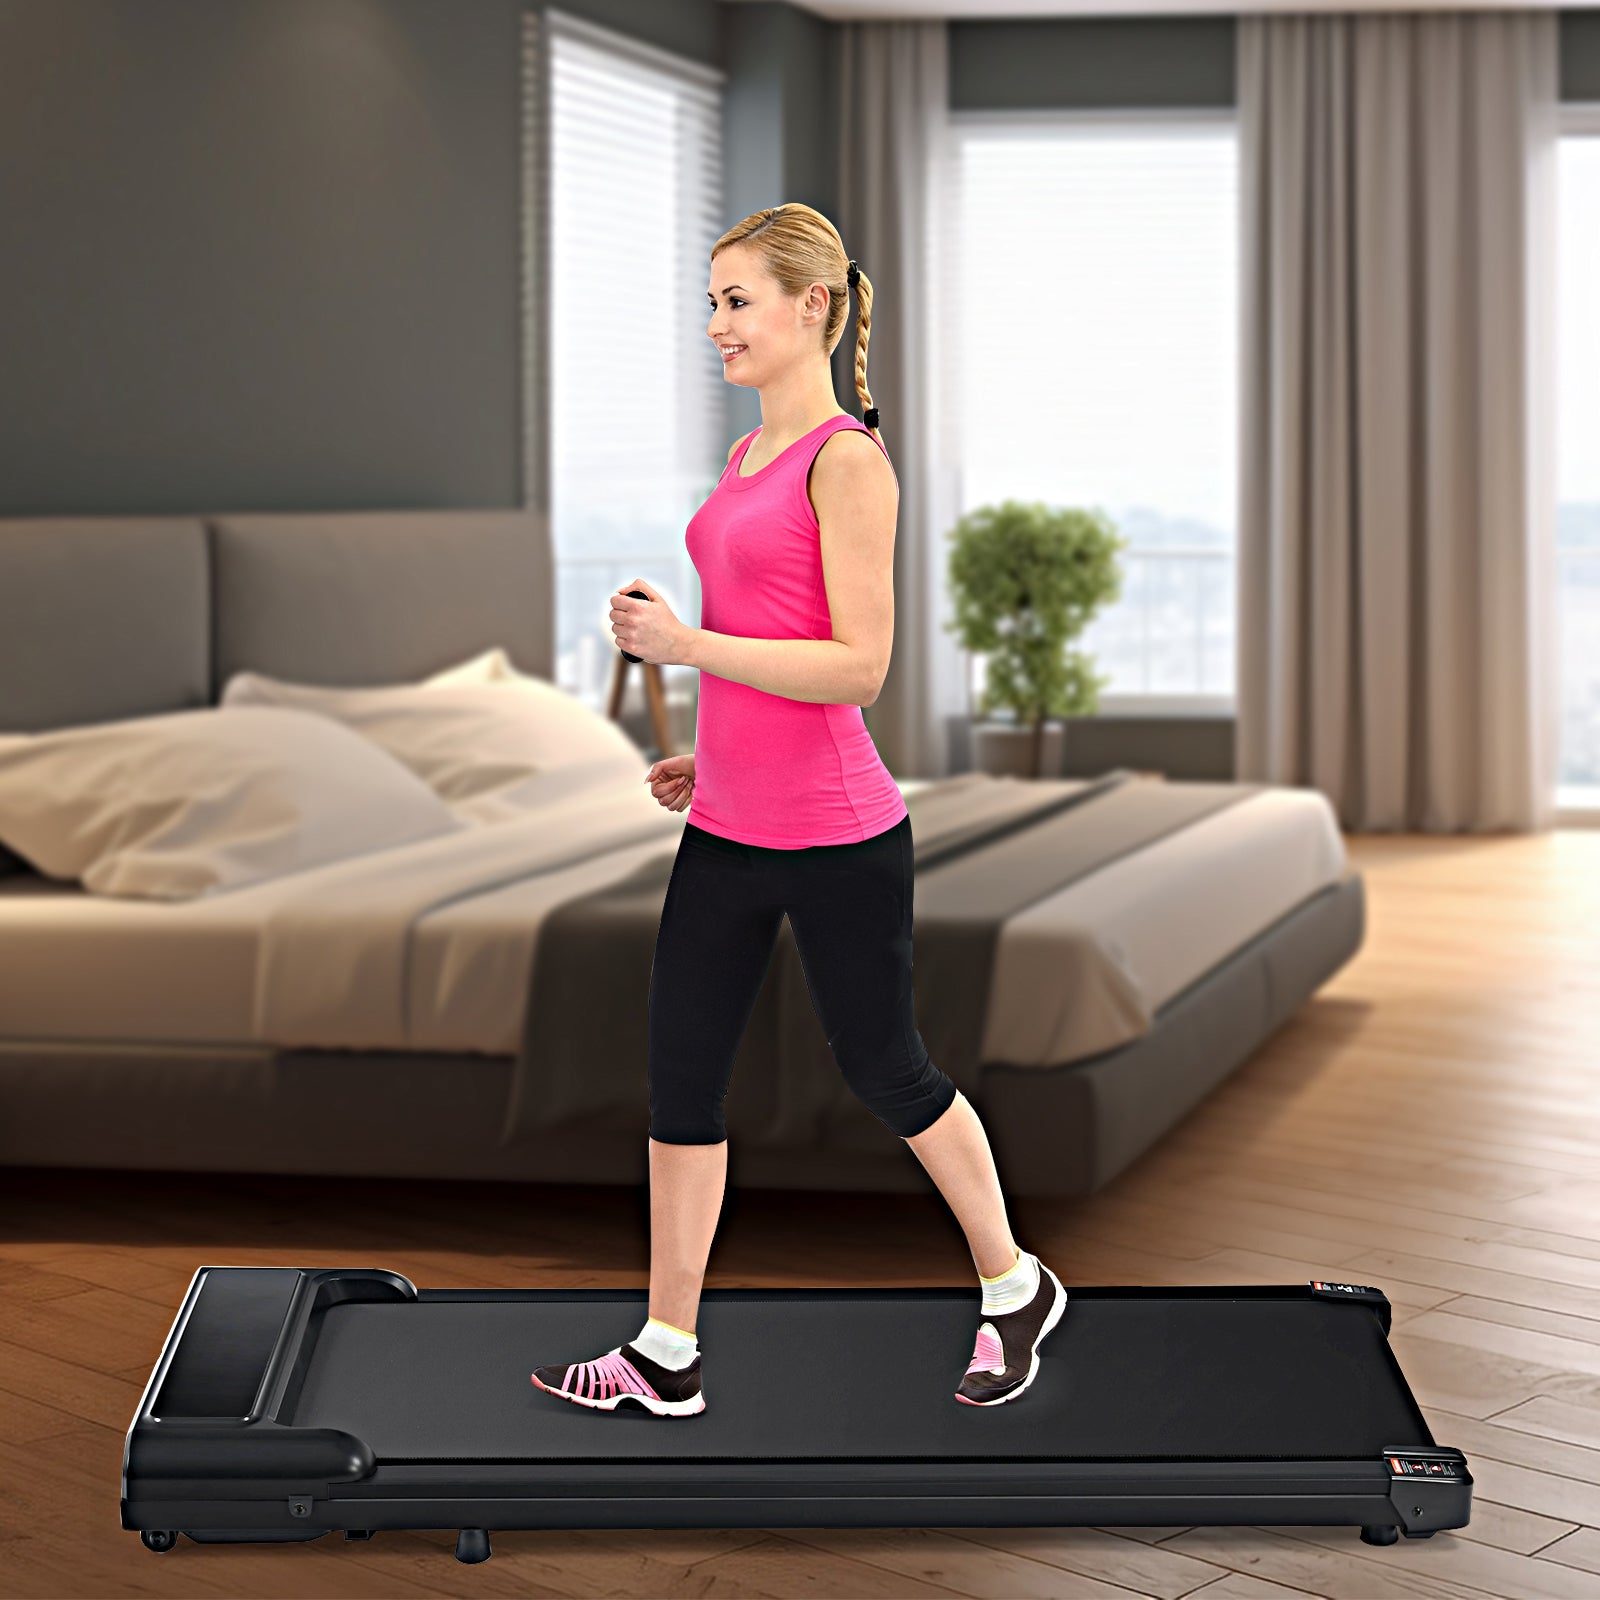 Walking Pad 300 lb Capacity, Desk Treadmill for Home indoor